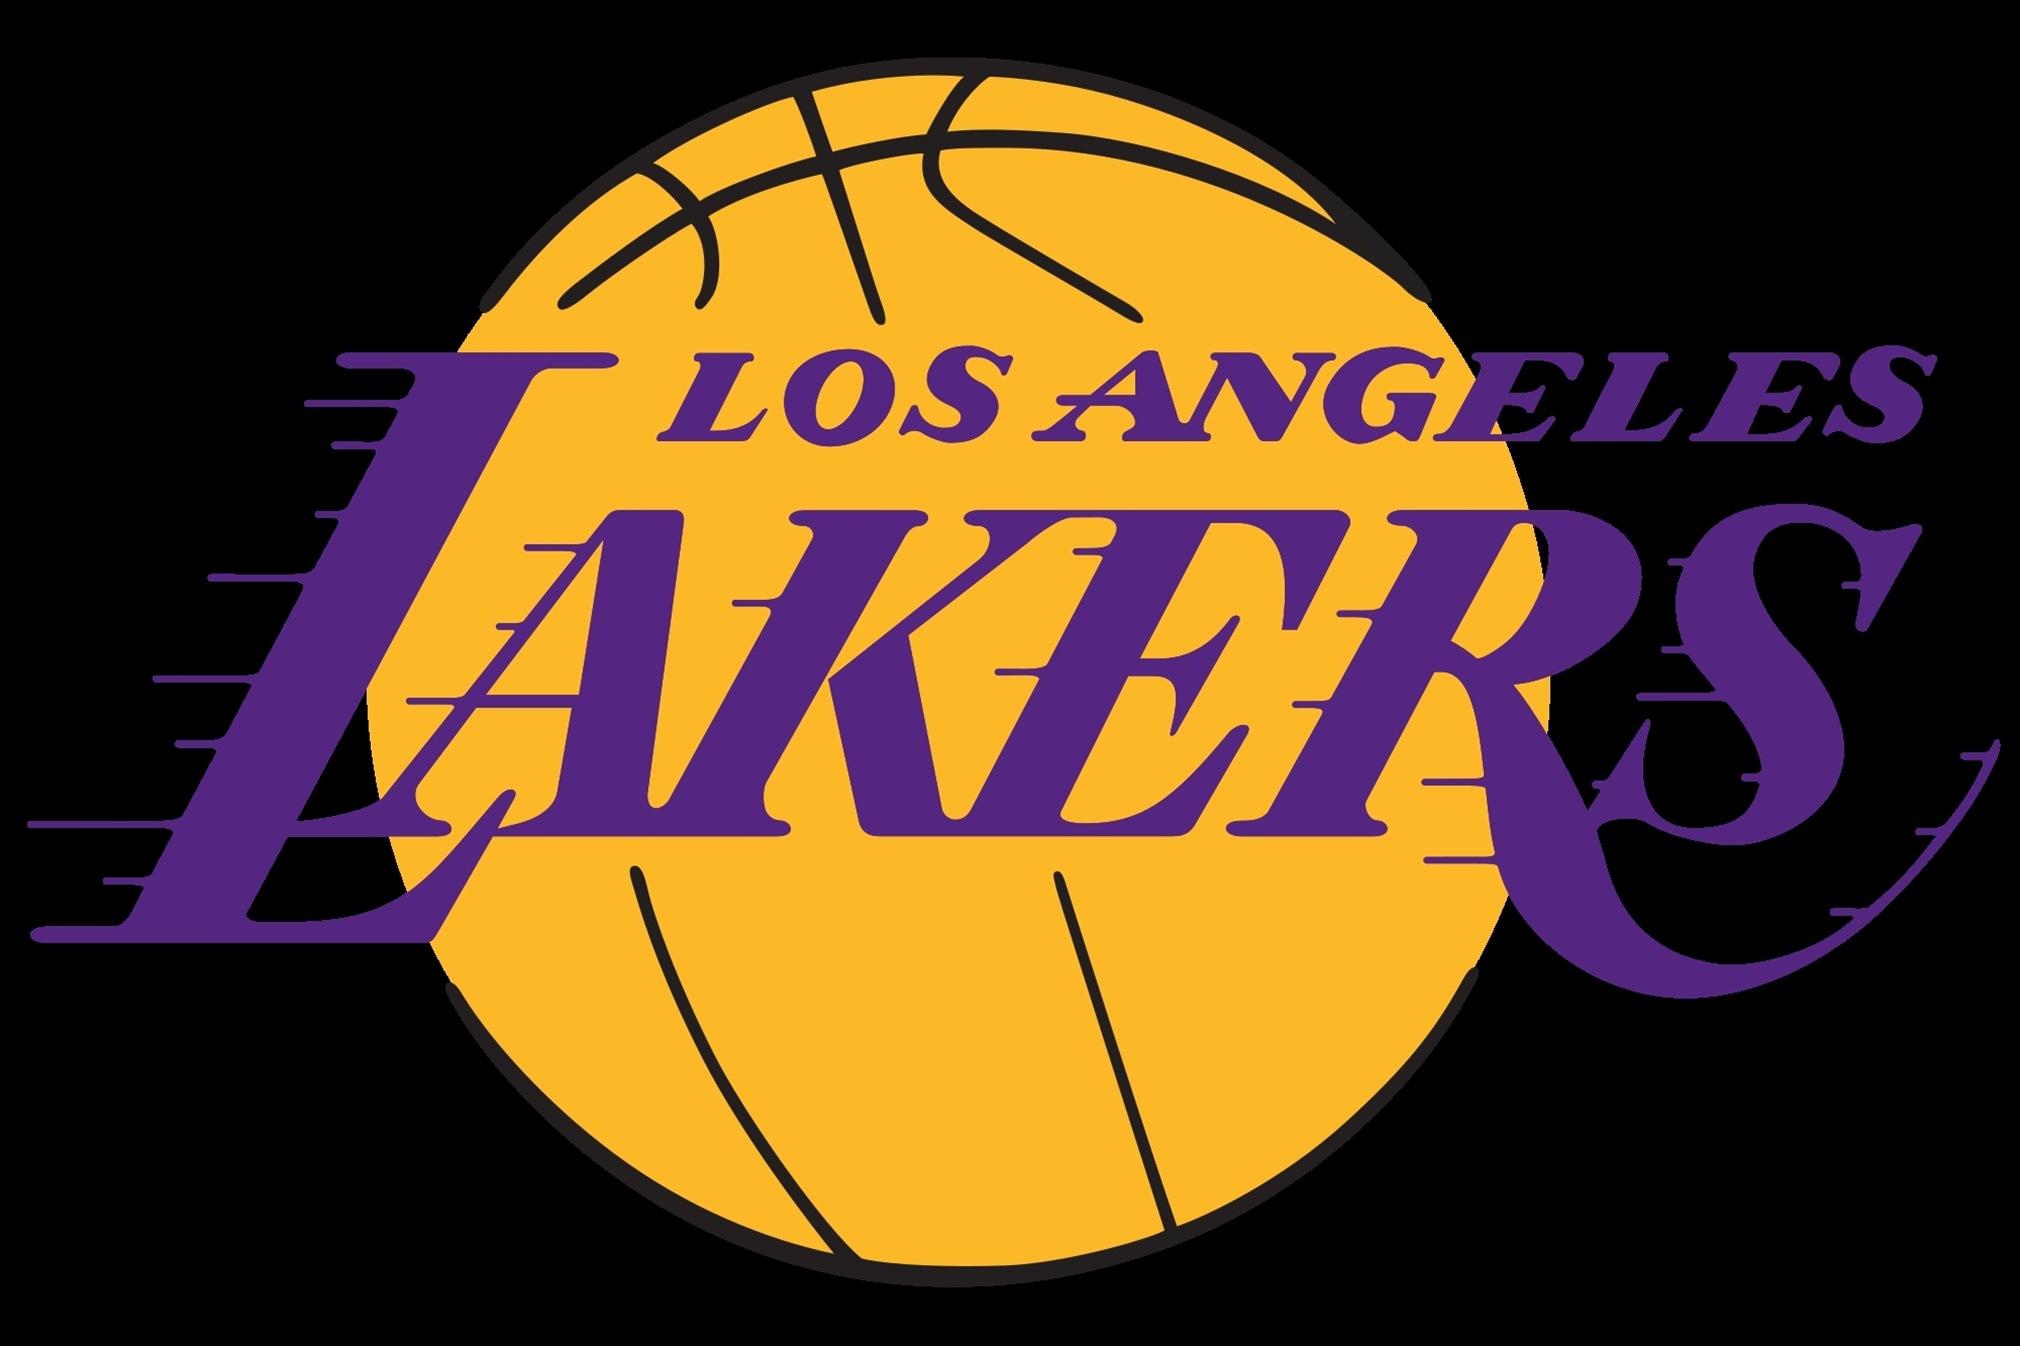 Los Angeles Lakers Logo - Los angeles lakers Logos